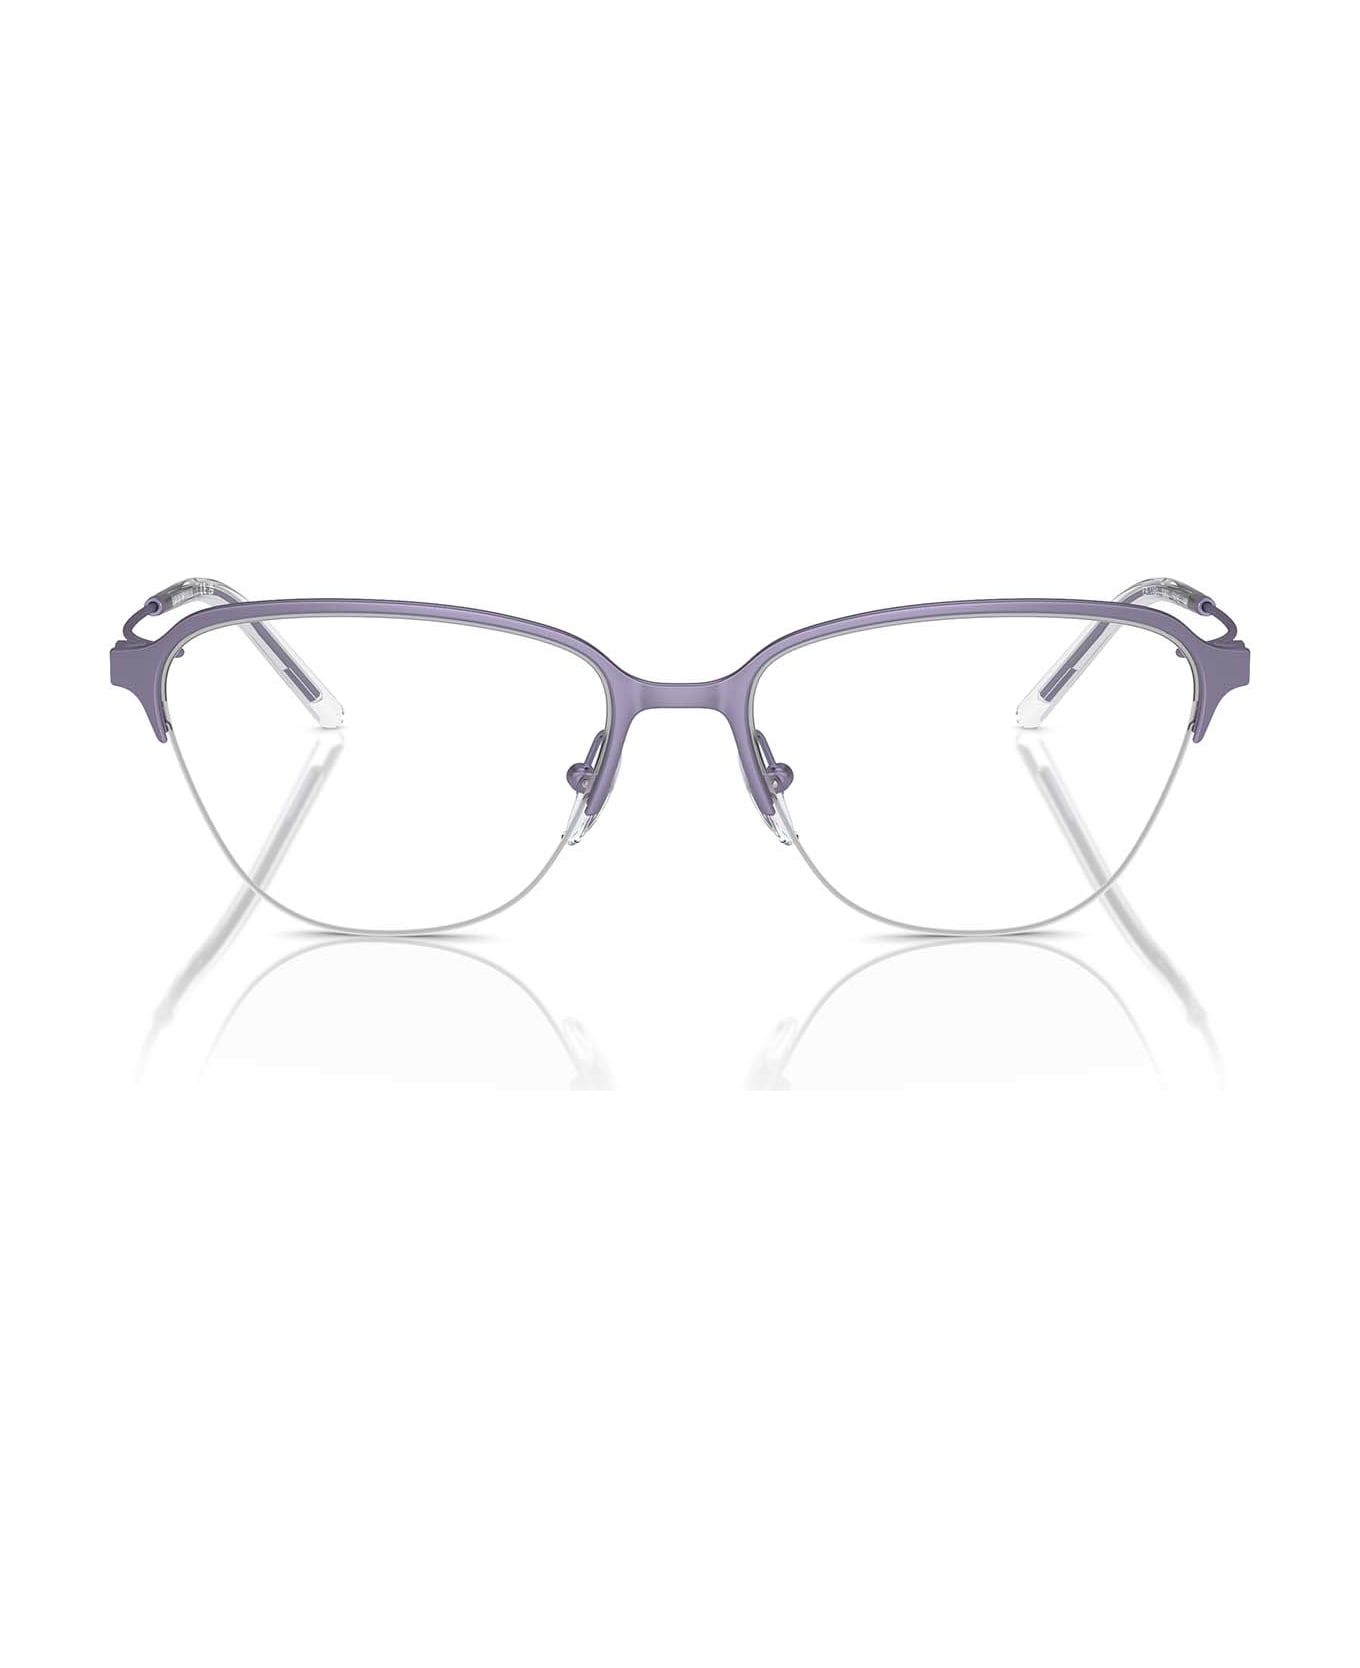 Emporio Armani Ea1161 Shiny Lilac Glasses - Shiny Lilac